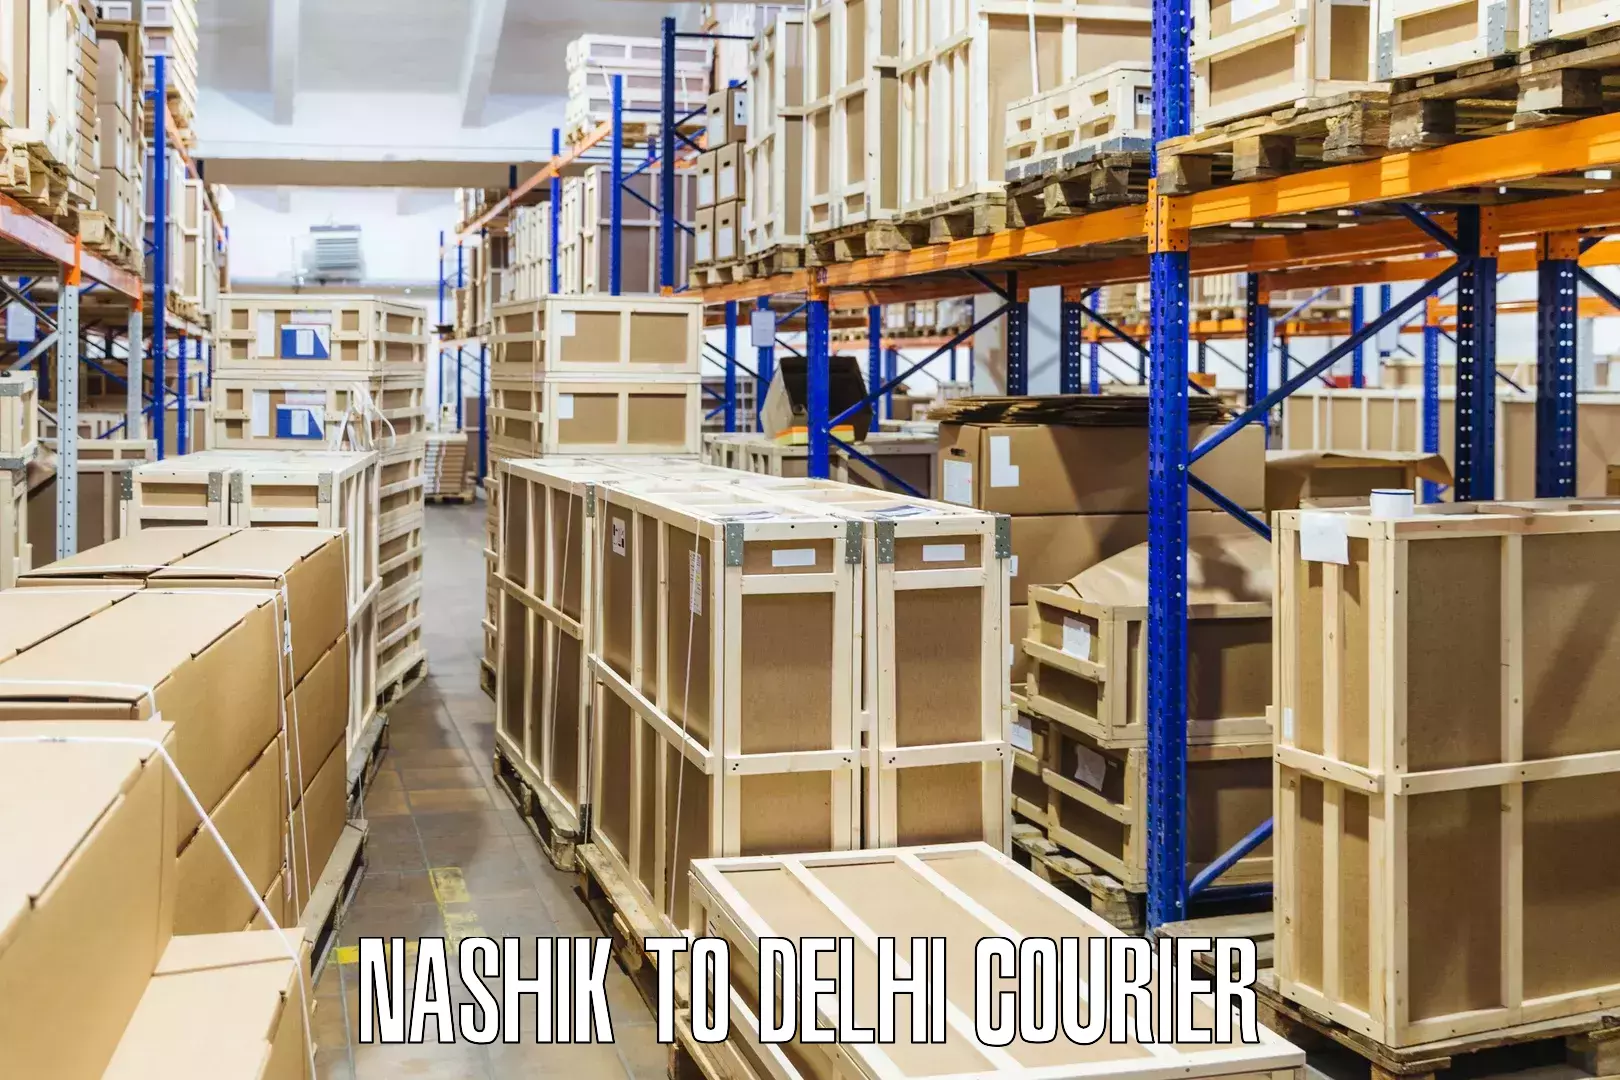 Express courier facilities Nashik to Lodhi Road